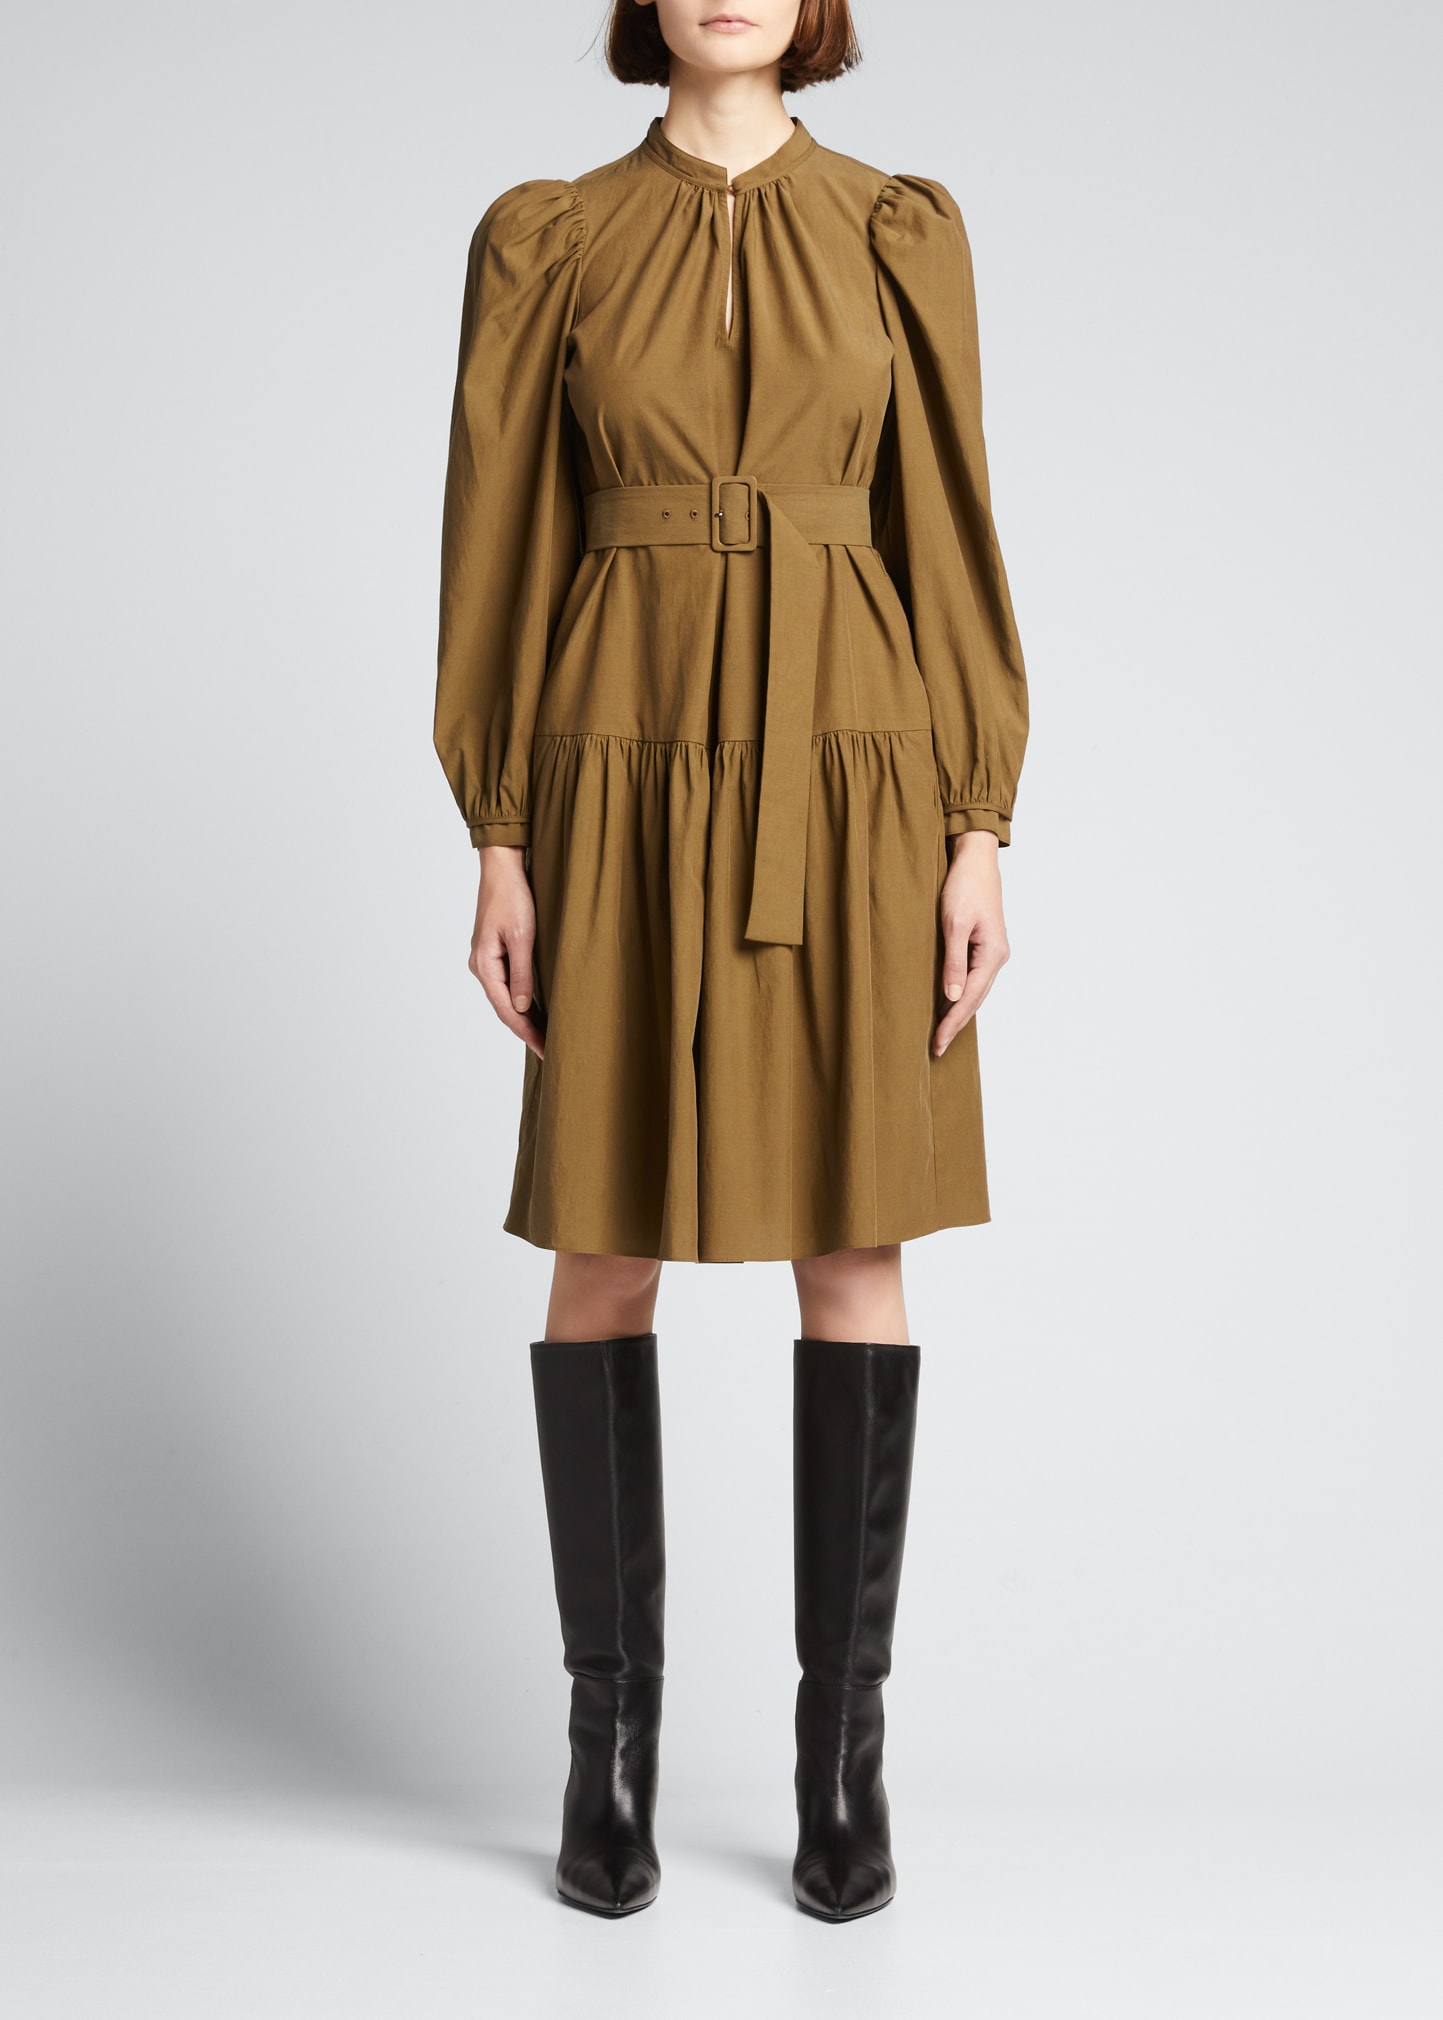 Rebecca Taylor Clothing : Jumpsuits & Slip Dresses at Bergdorf 